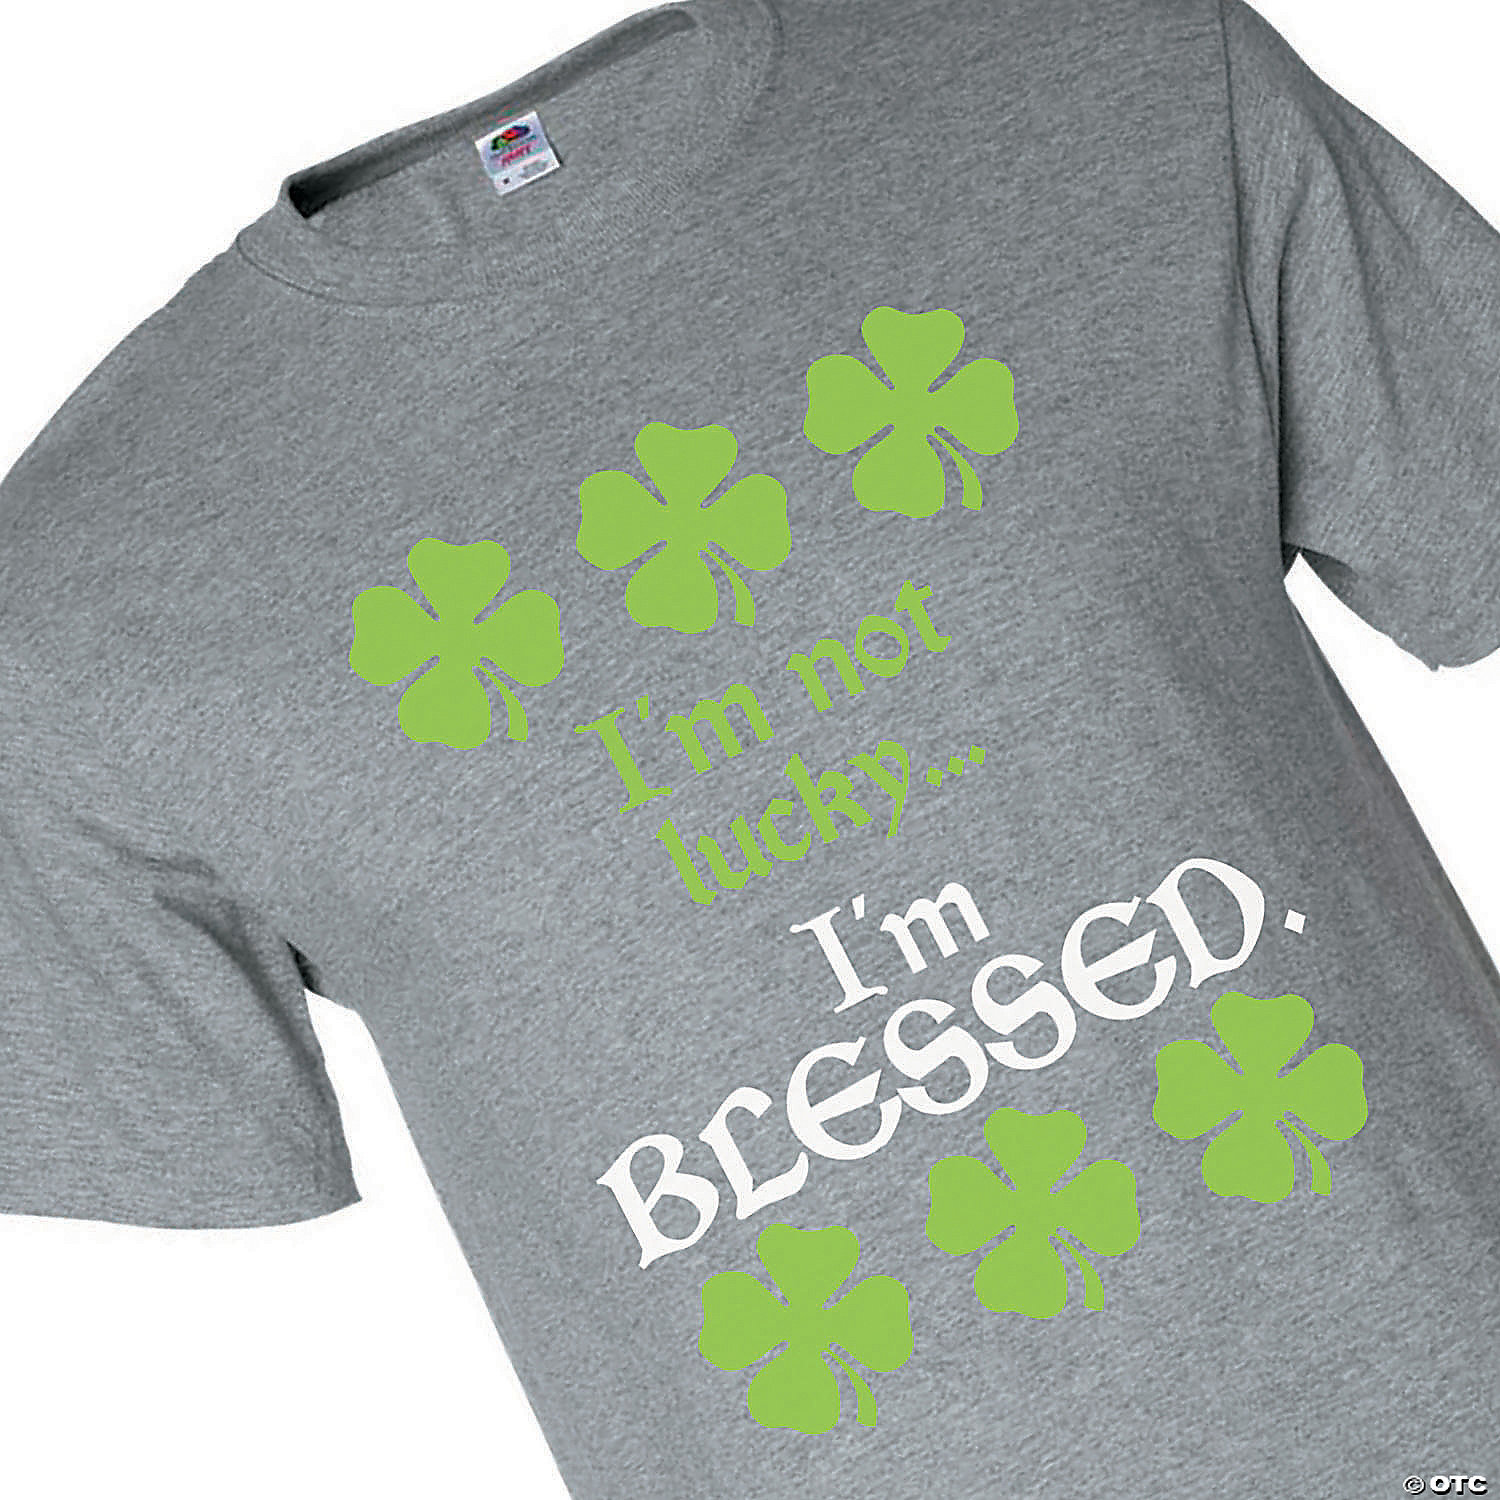 Mom Tee Patrick Was A Saint But I Aint T-shirt Funny Shirt Women's T-shirt St Patrick's Day Shirt